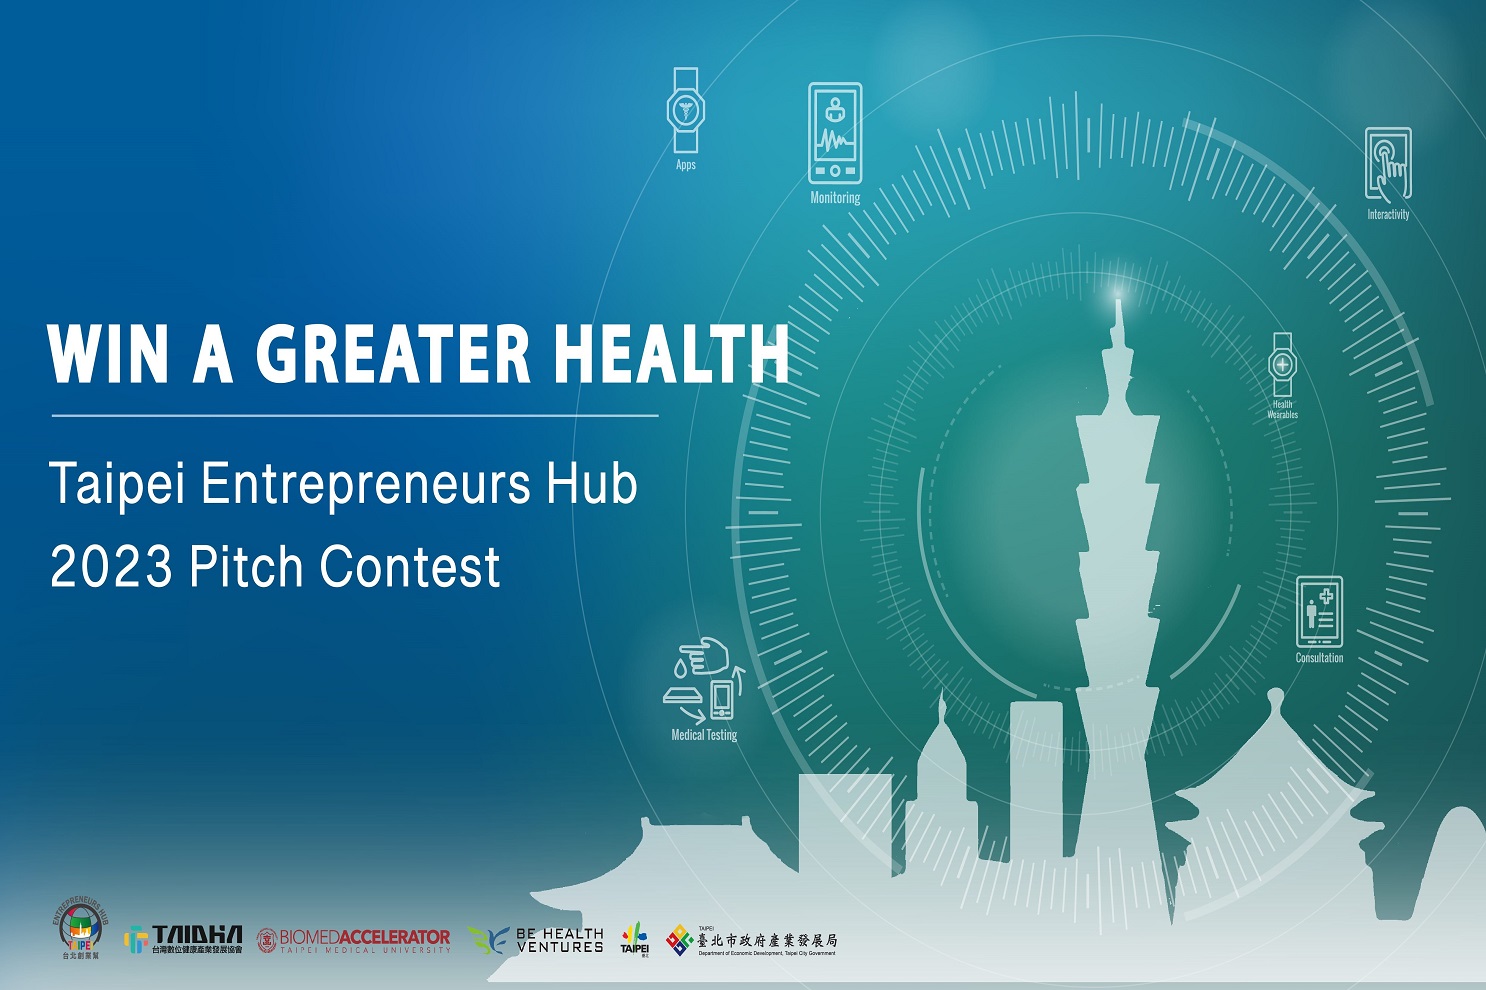 “Win A Greater Health” 国際オンライン起業家コンペティション